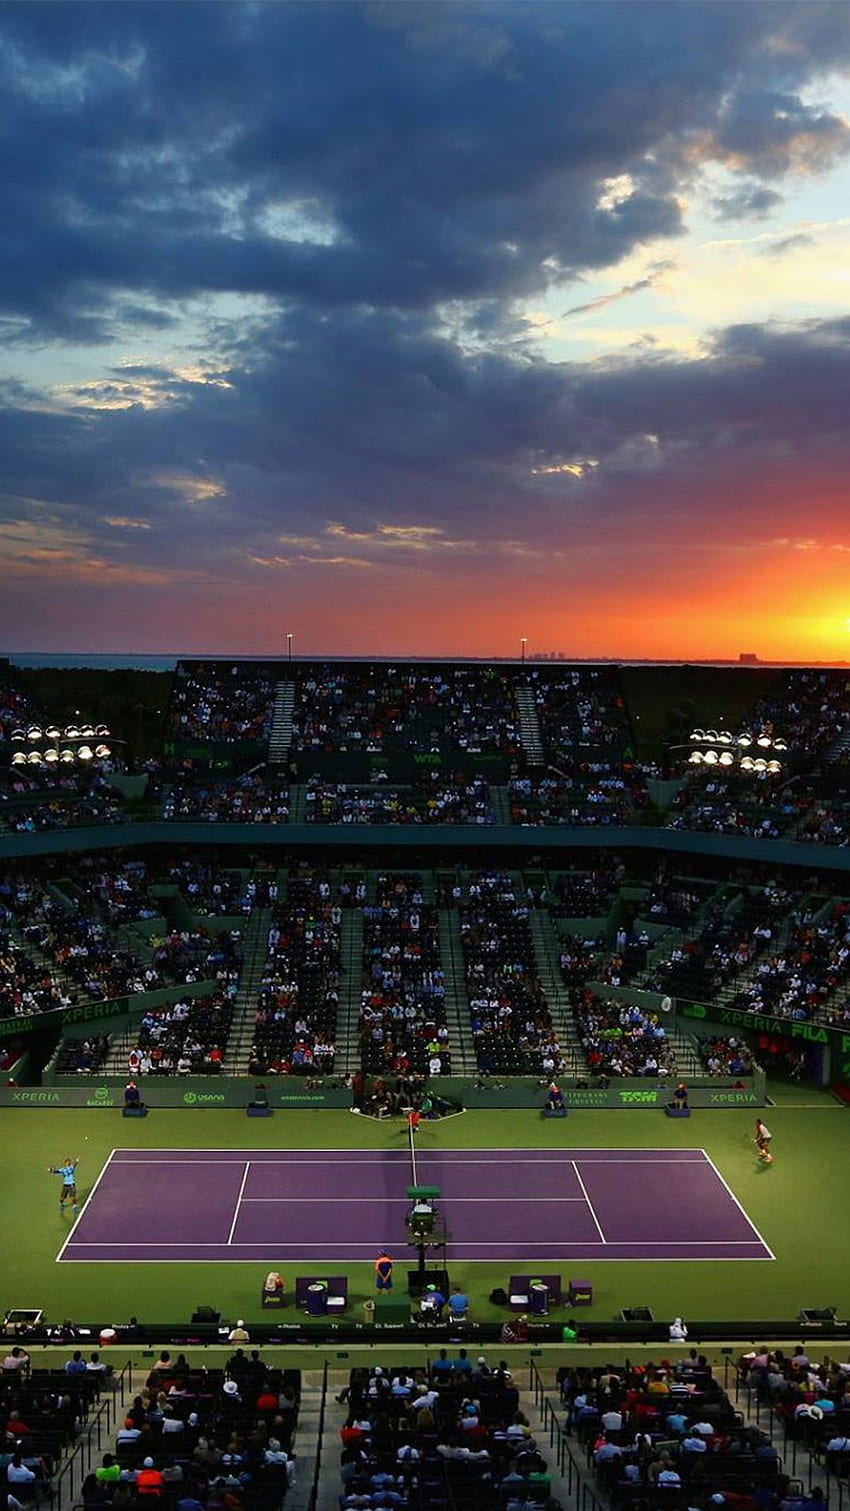 Cancha de tenis Miami Open Sunset Android fondo de pantalla del teléfono